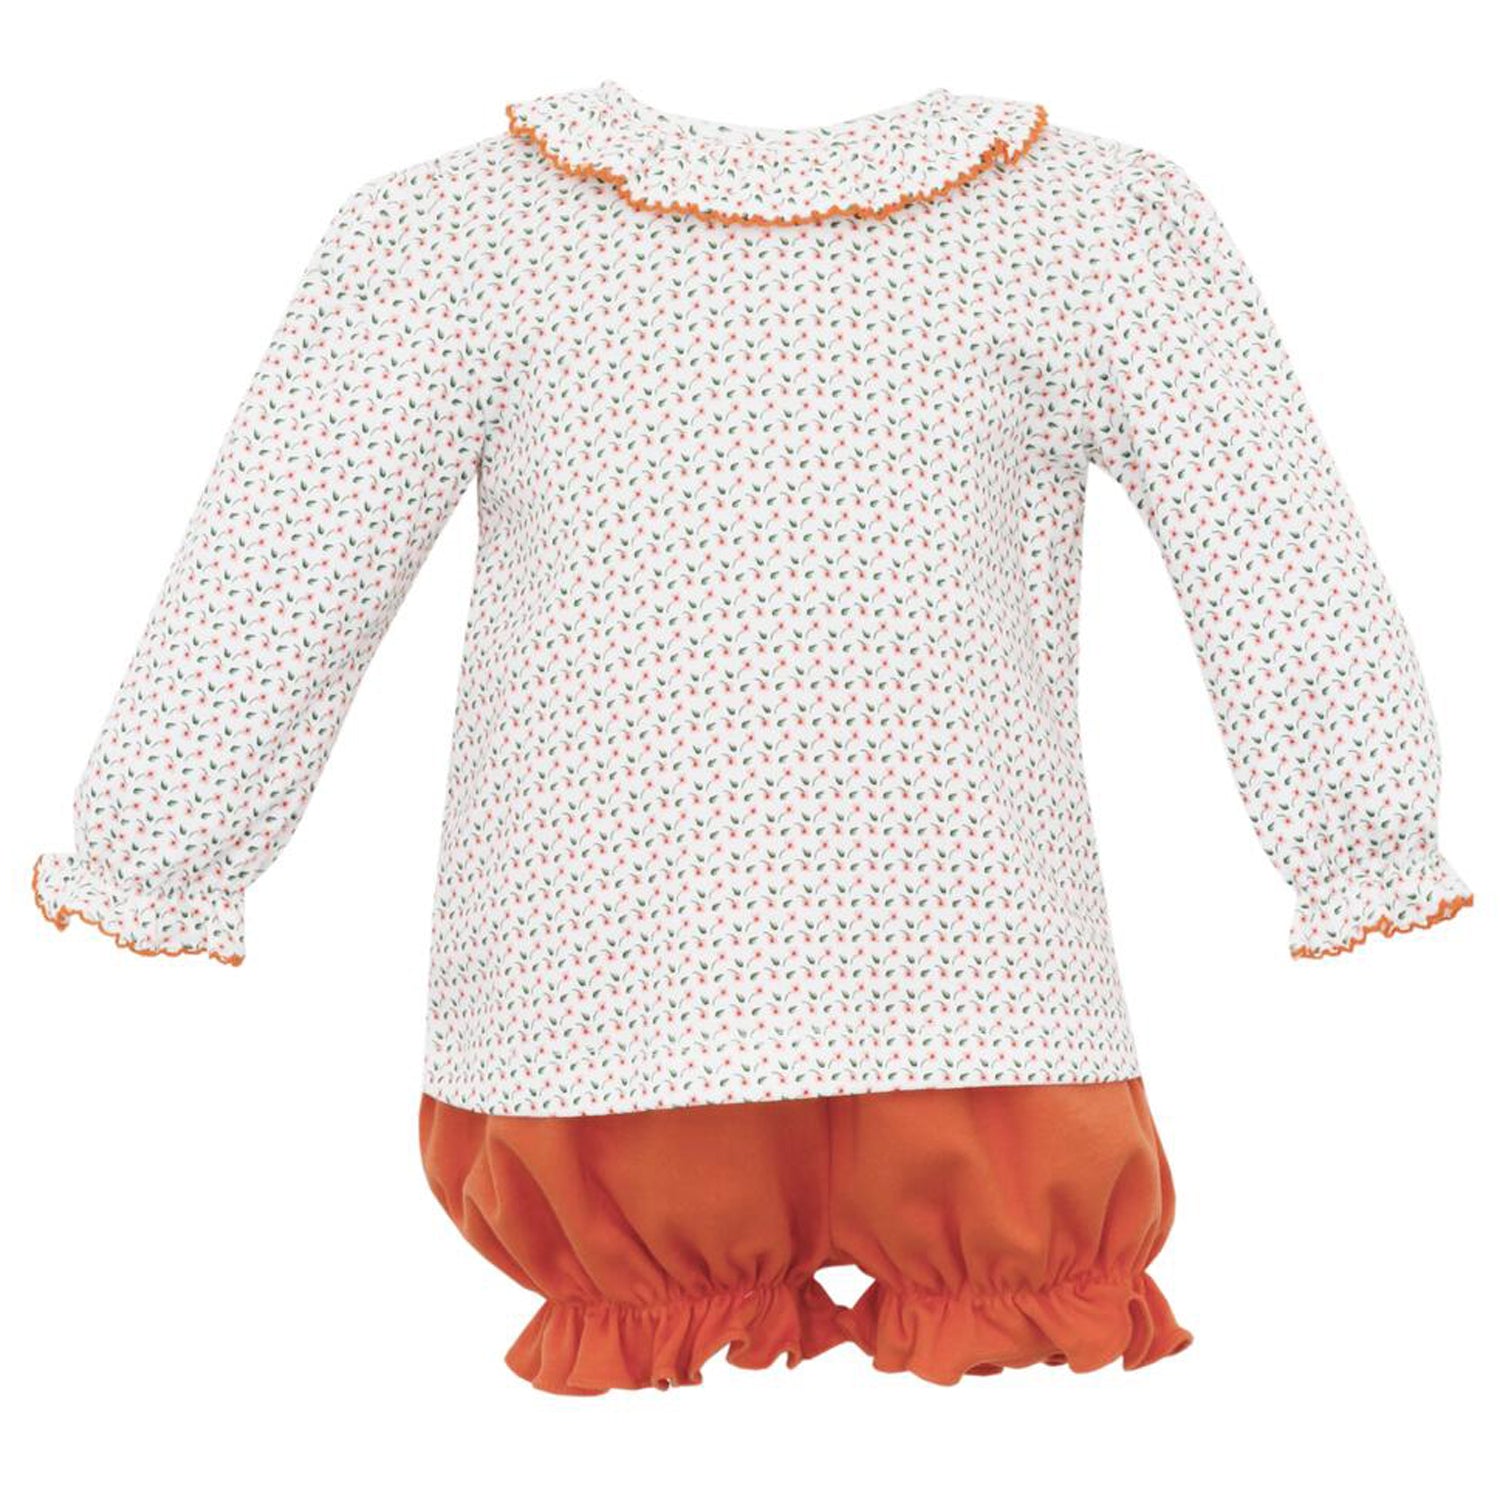 Orange Floral Print Knit Top w/ Solid Orange Knit Bloomers